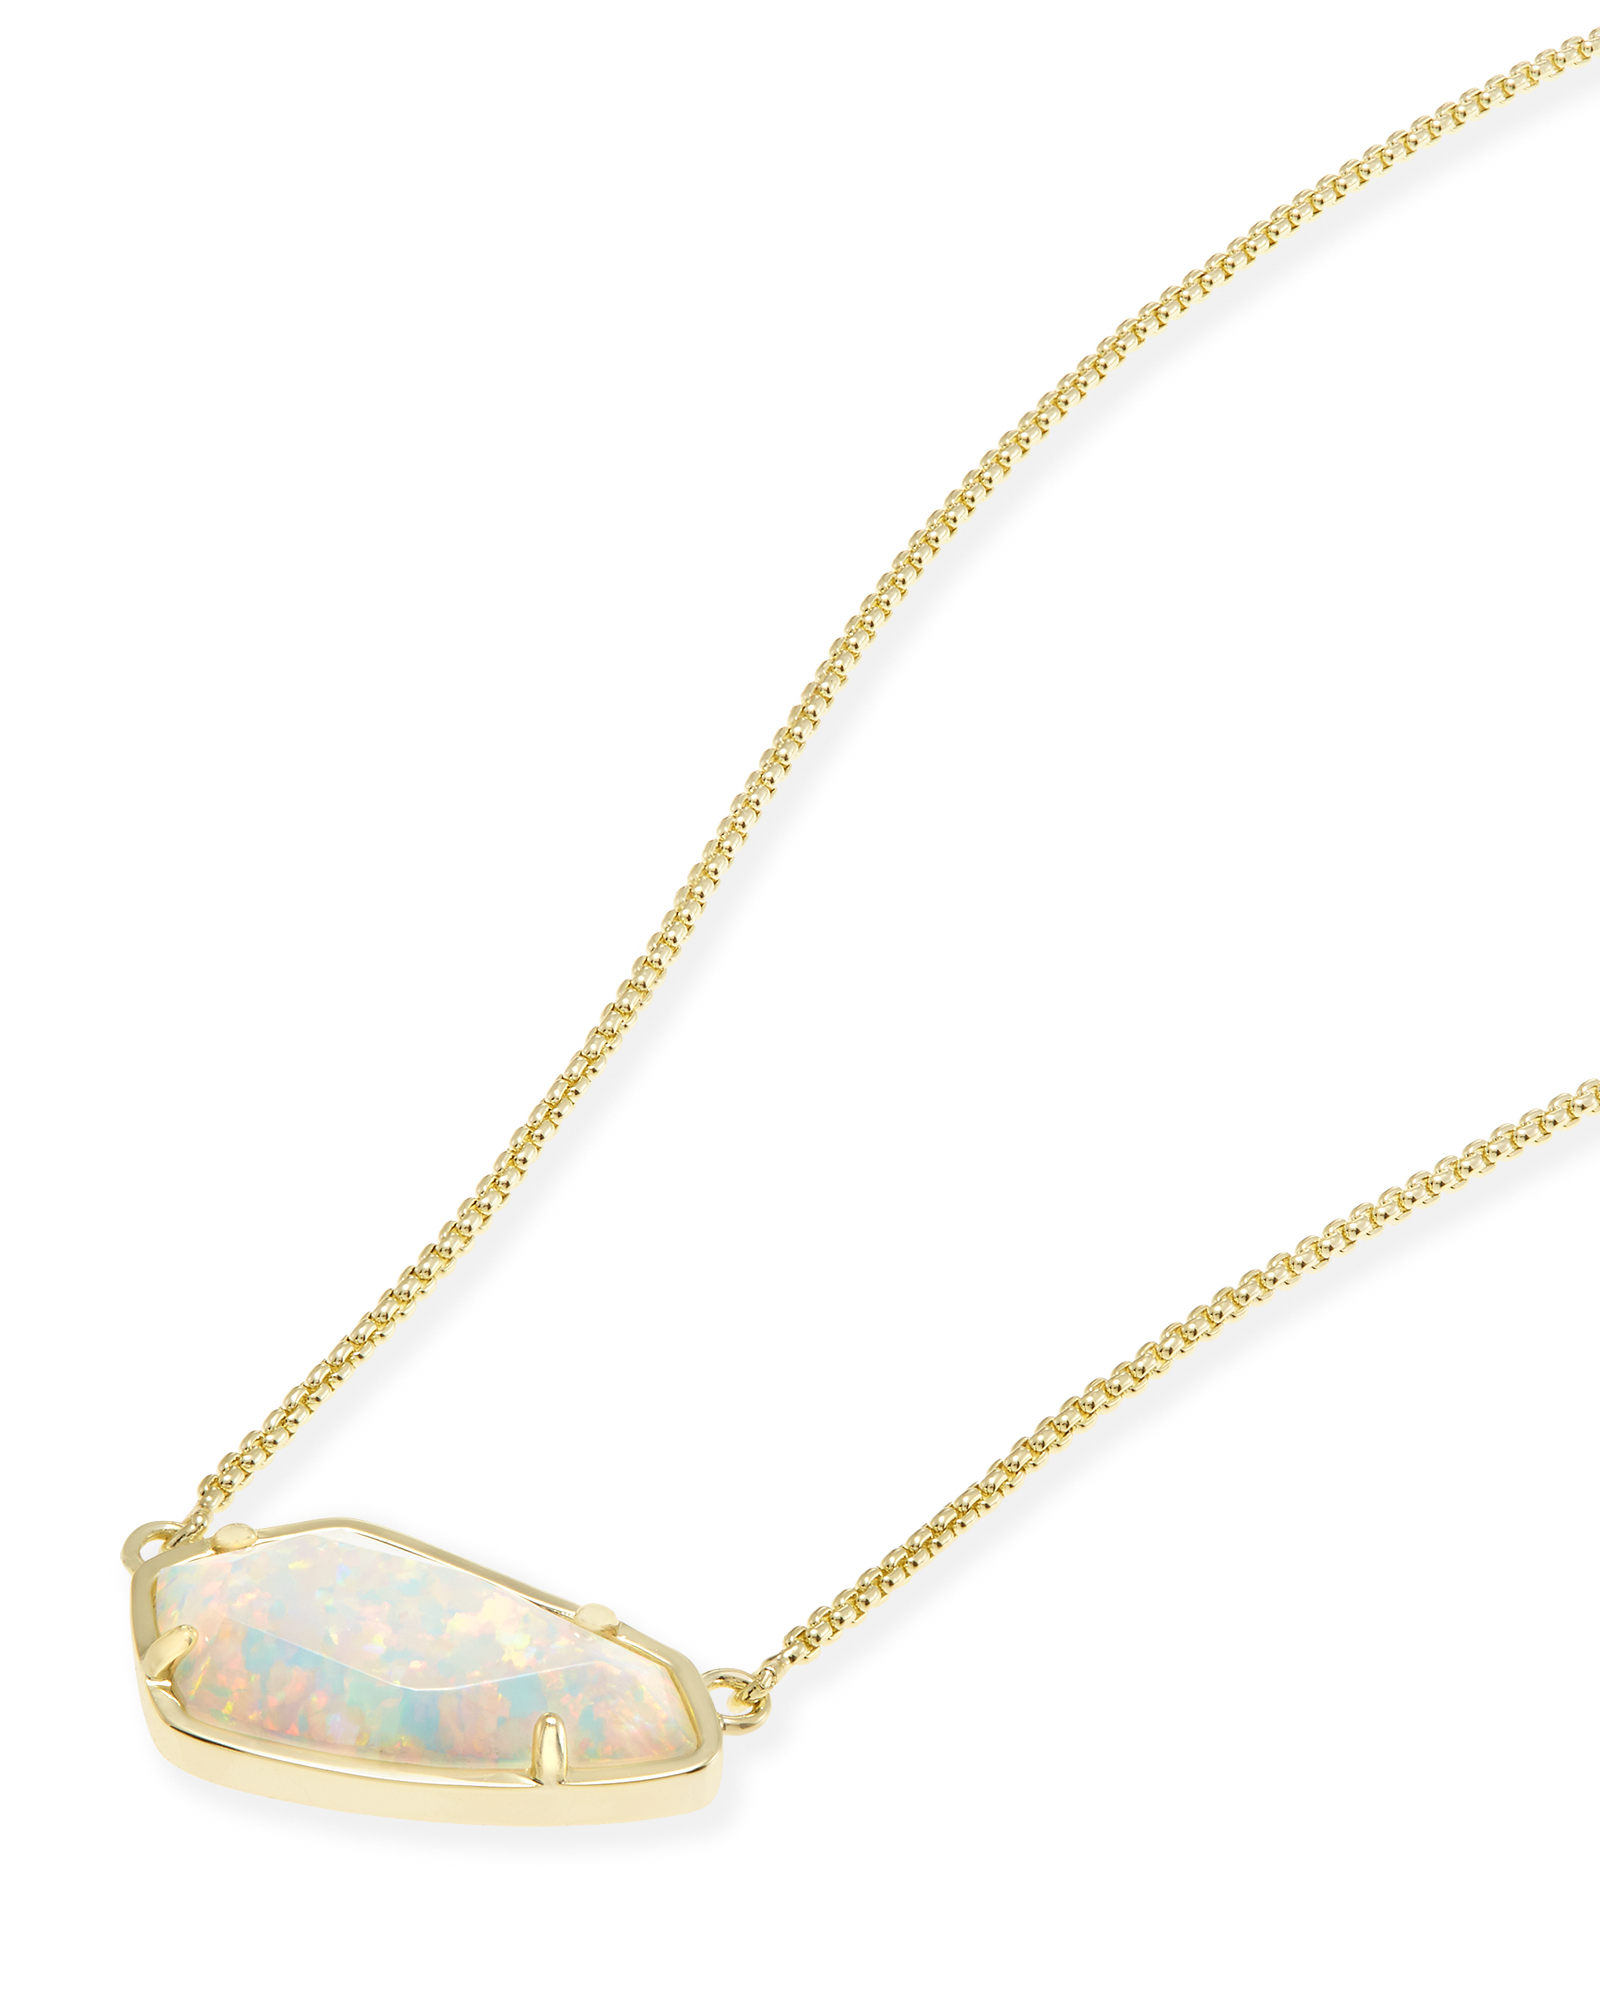 Cami Gold Pendant Necklace in Kyocera Opal | Kendra Scott